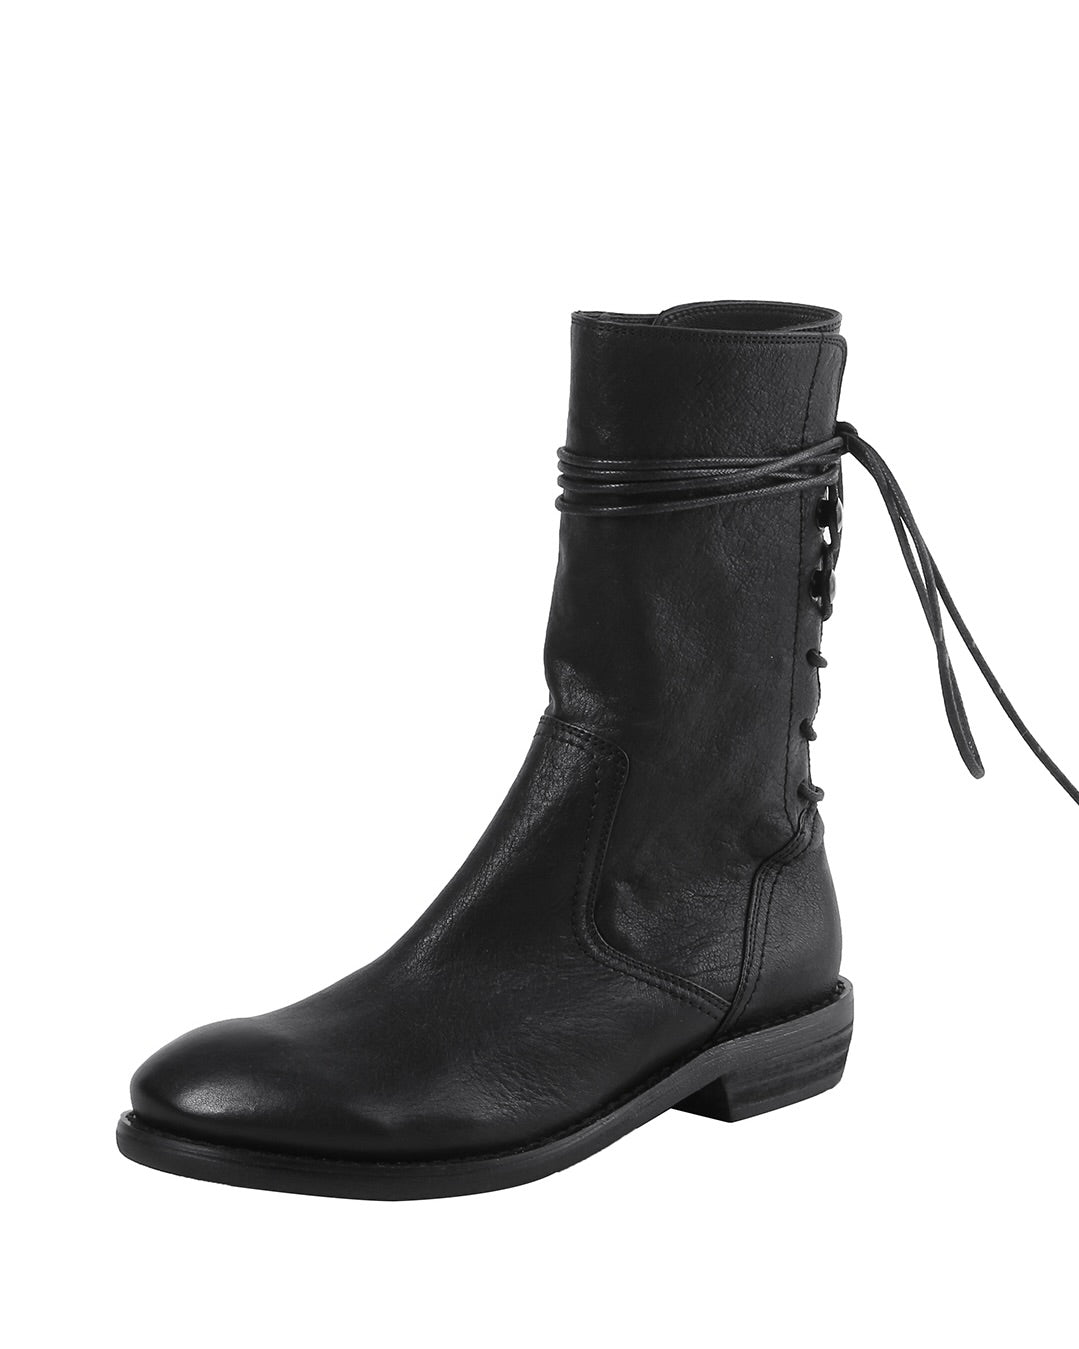 730-horsehide-boots-black